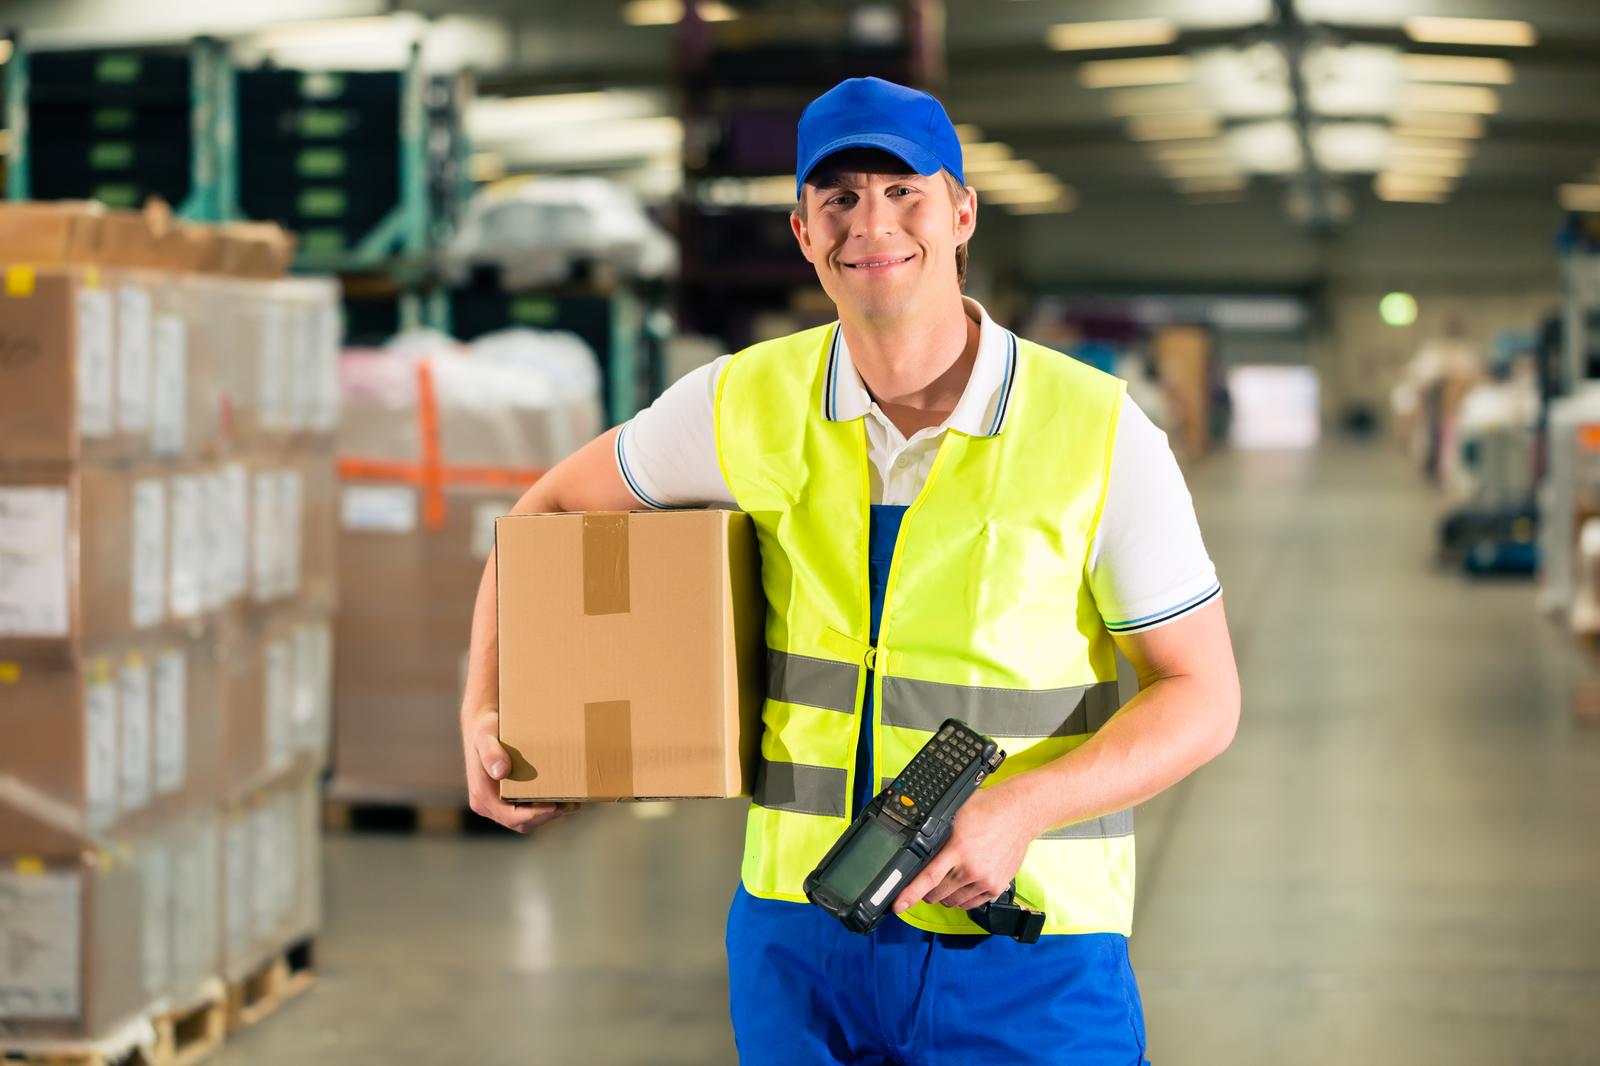 VENTUS LOGISTICS OÜ - Today, Ventus Logistics offers its customers the services of transportation, warehousing, customs c...